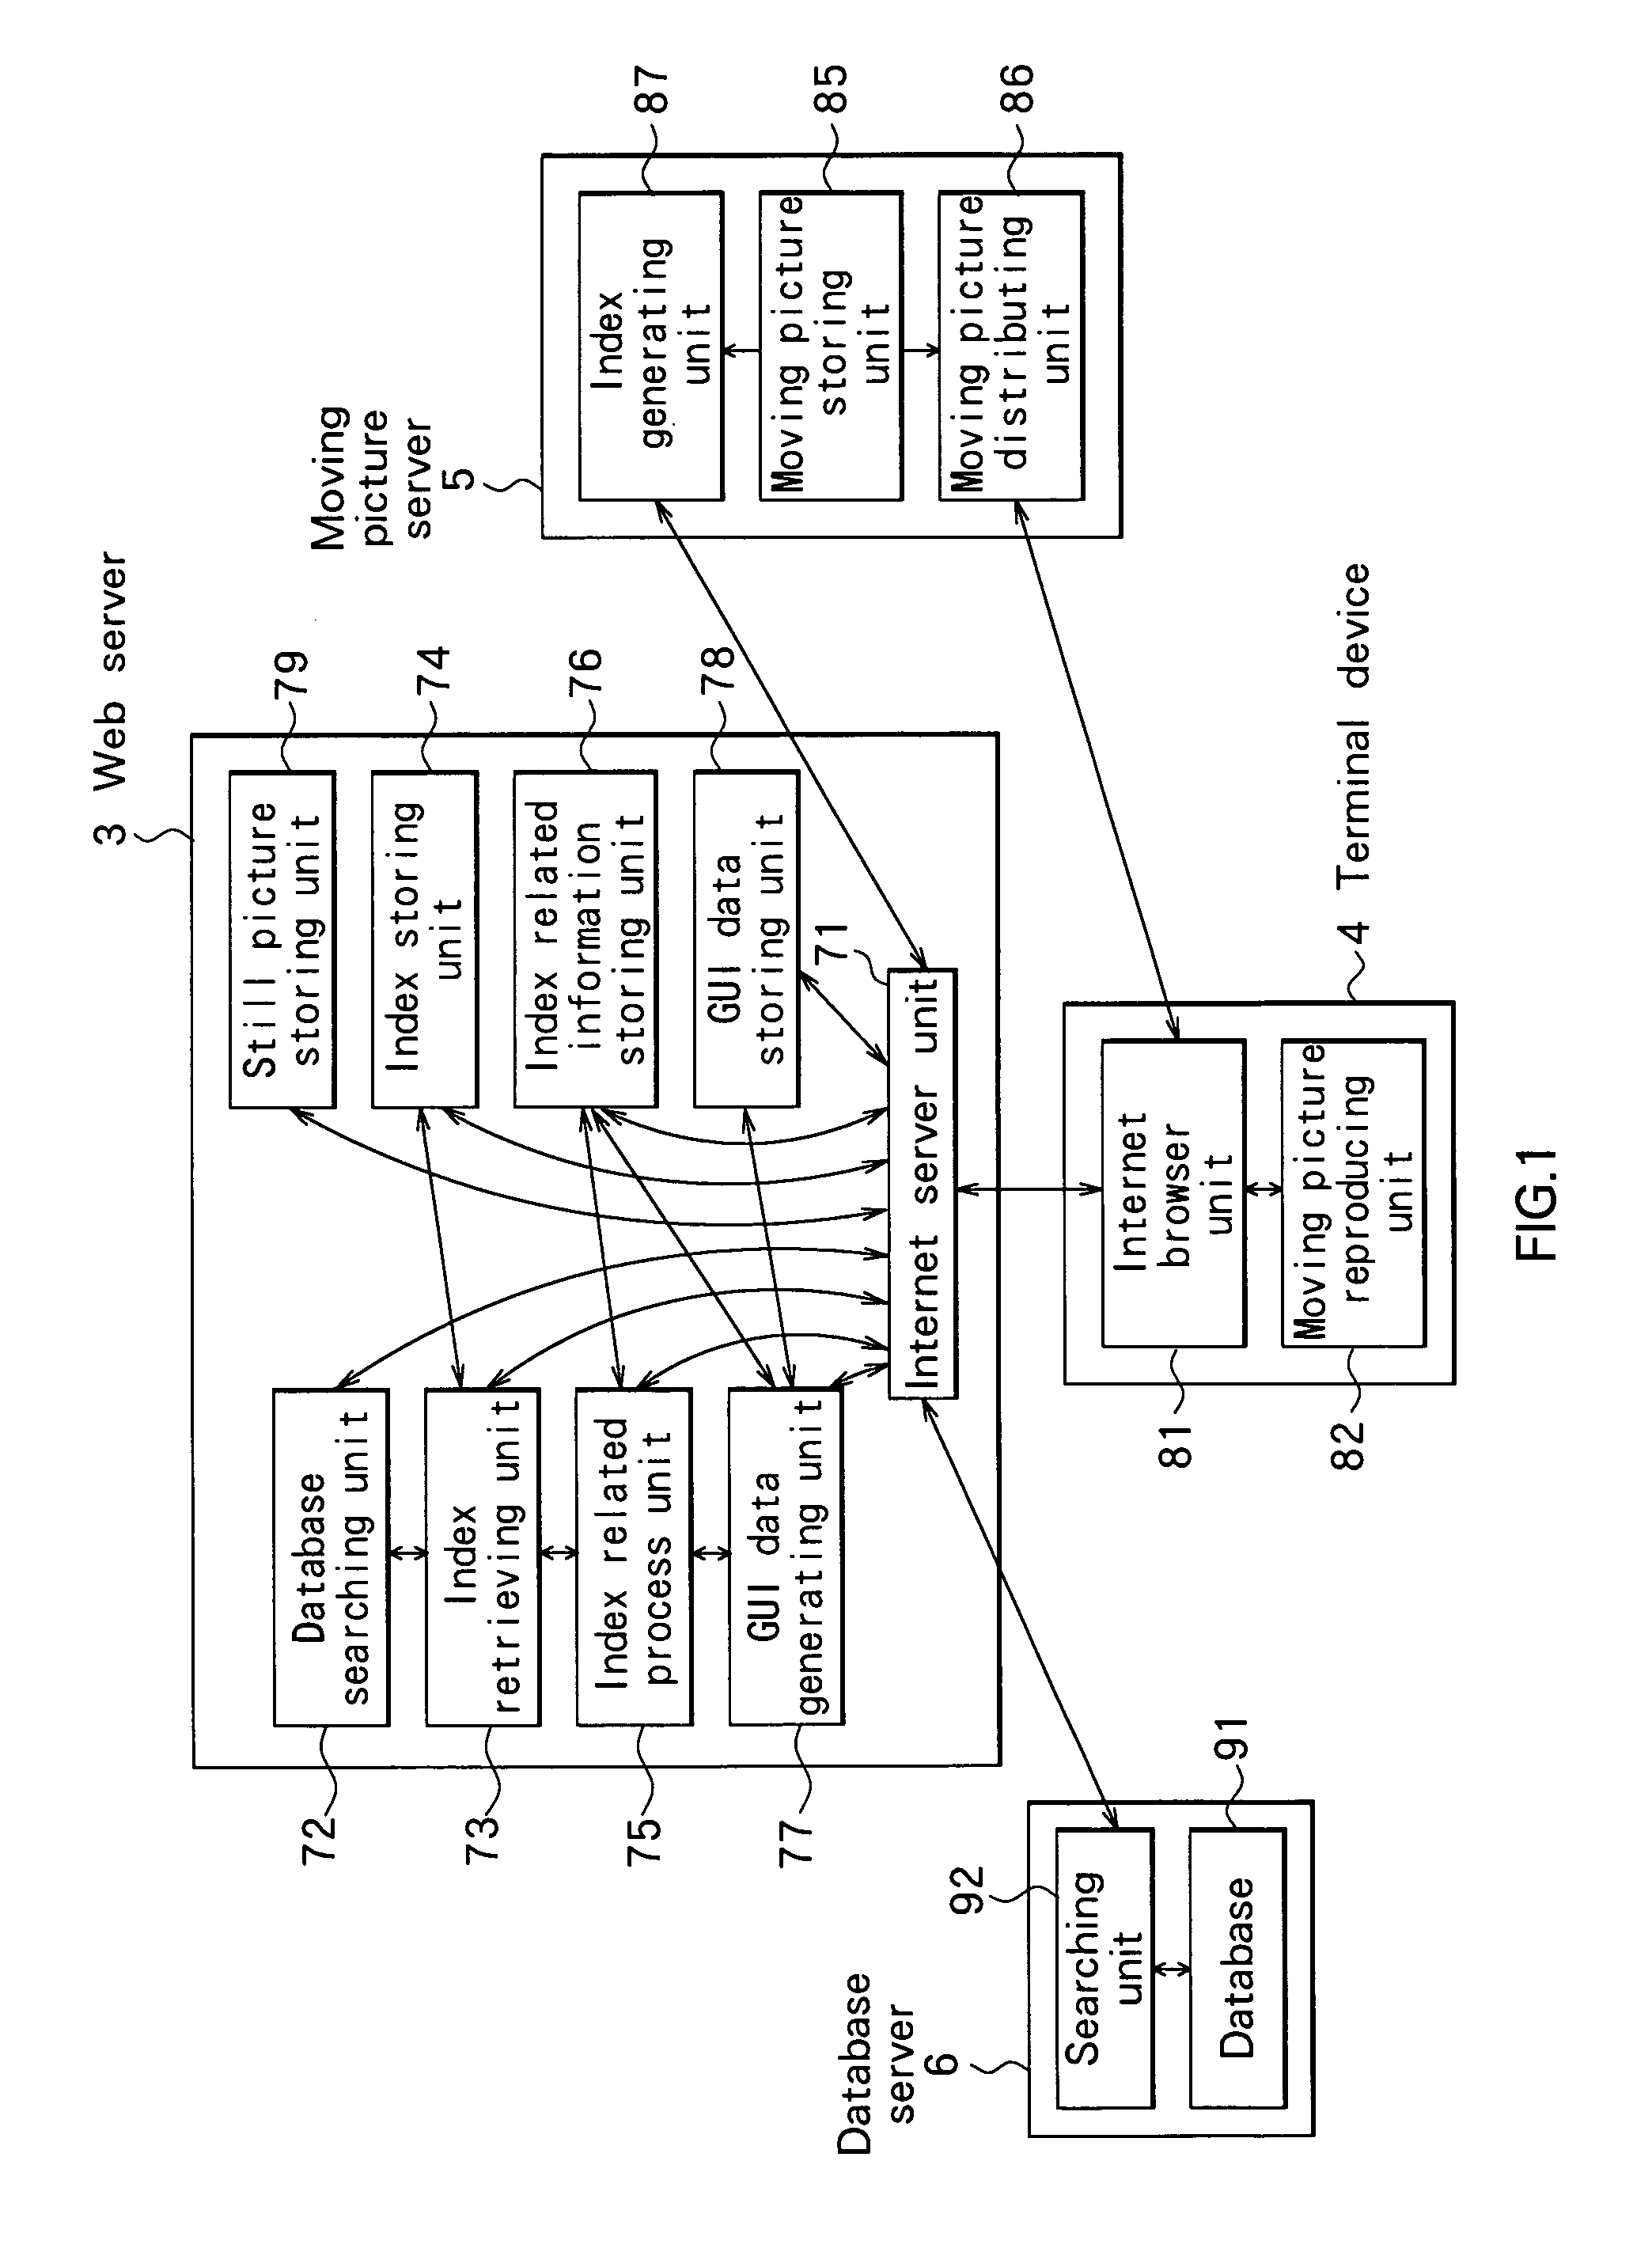 Image generating apparatus and method